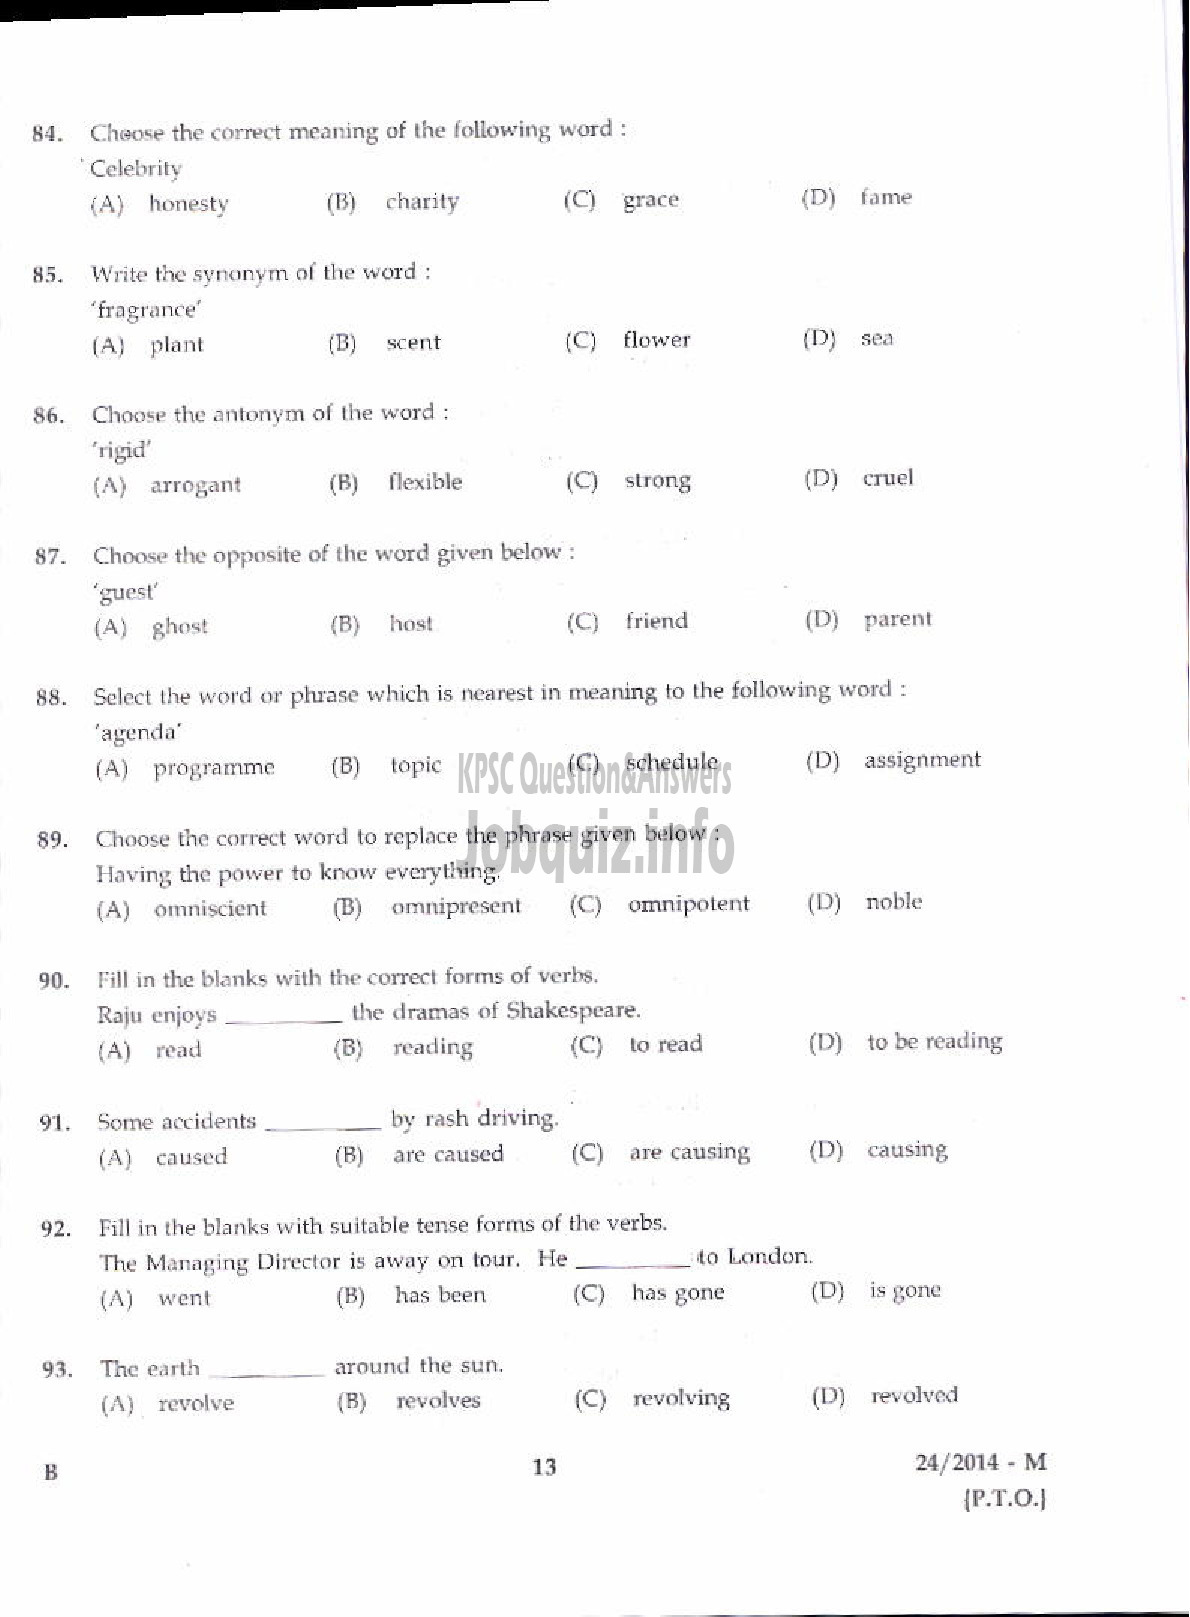 Kerala PSC Question Paper - LOWER DIVISION CLERK VARIOUS 2014 MALAPPURAM ( Malayalam ) -9